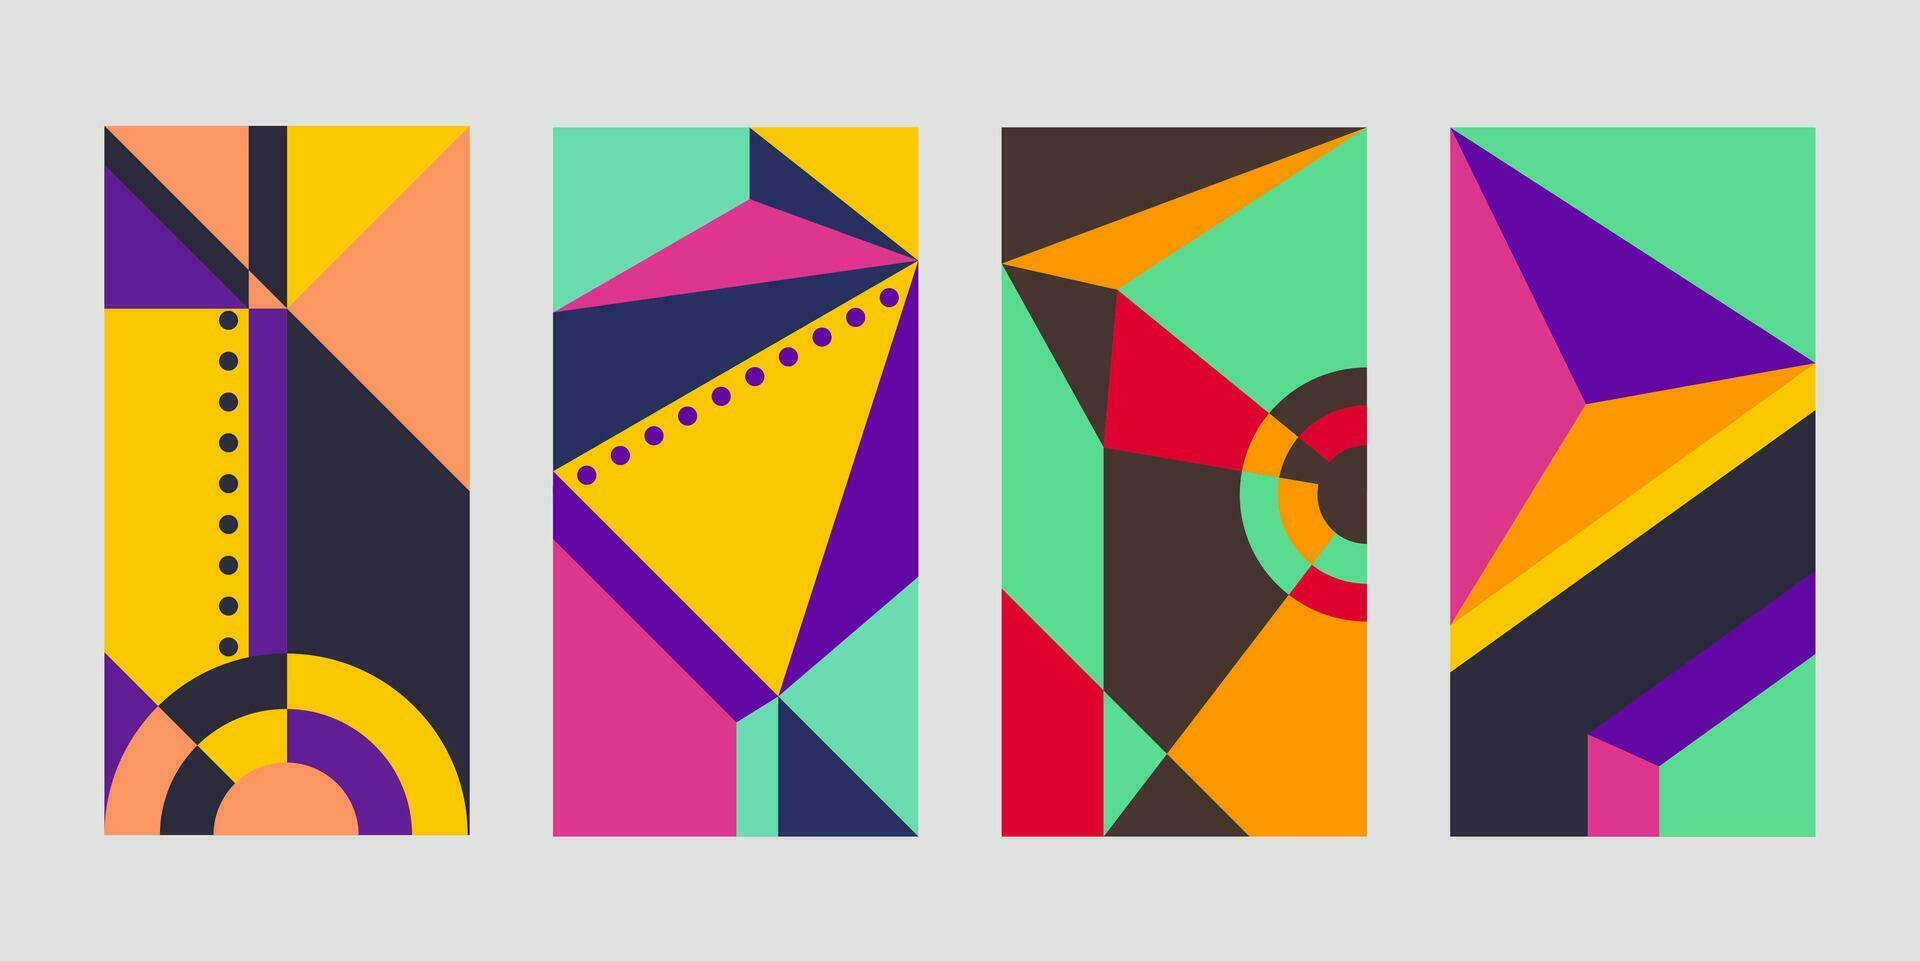 enkel geometrisk platt abstrakt.gjort i fyra former omslag storlek bakgrund.färgfull konst bakgrund vektor